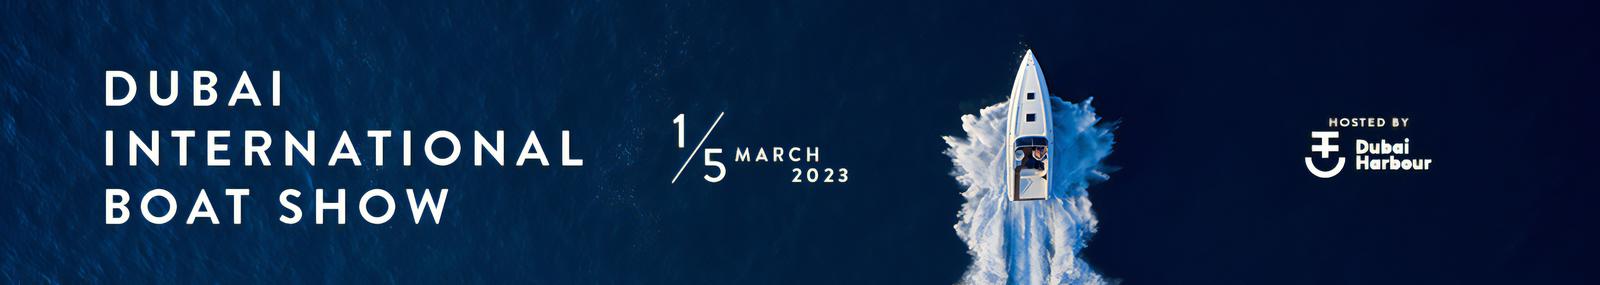 Dubai International Boat Show 2023 banner